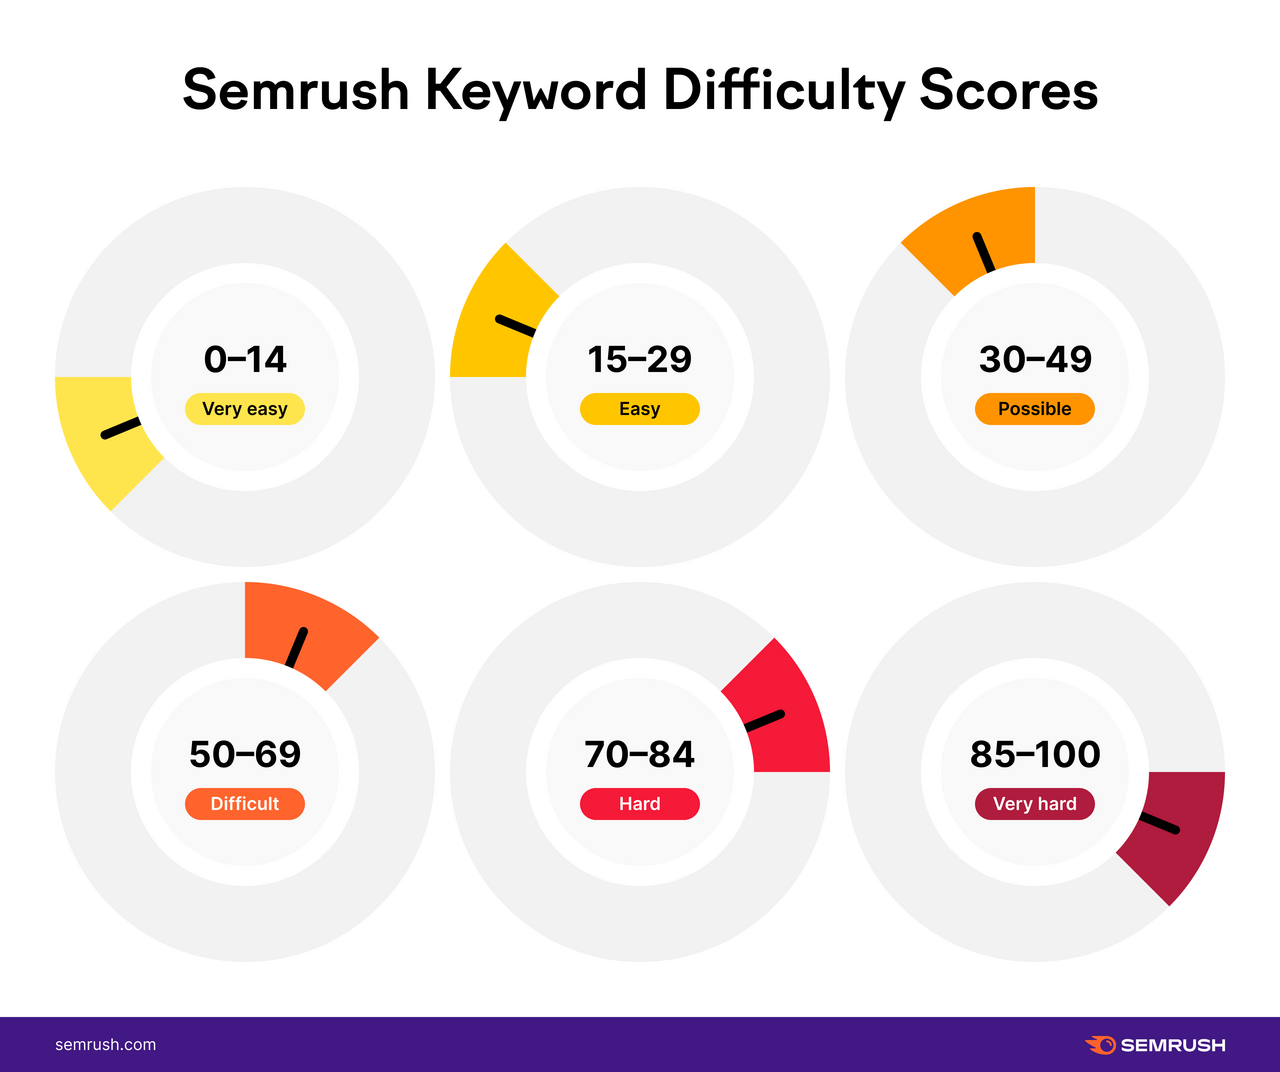 Semrush keyword difficulty scores: 0-14 is very easy, 15-29 is easy, 30-49 is possible, 50-69 is difficult, 70-84 is hard, 85-100 is very hard